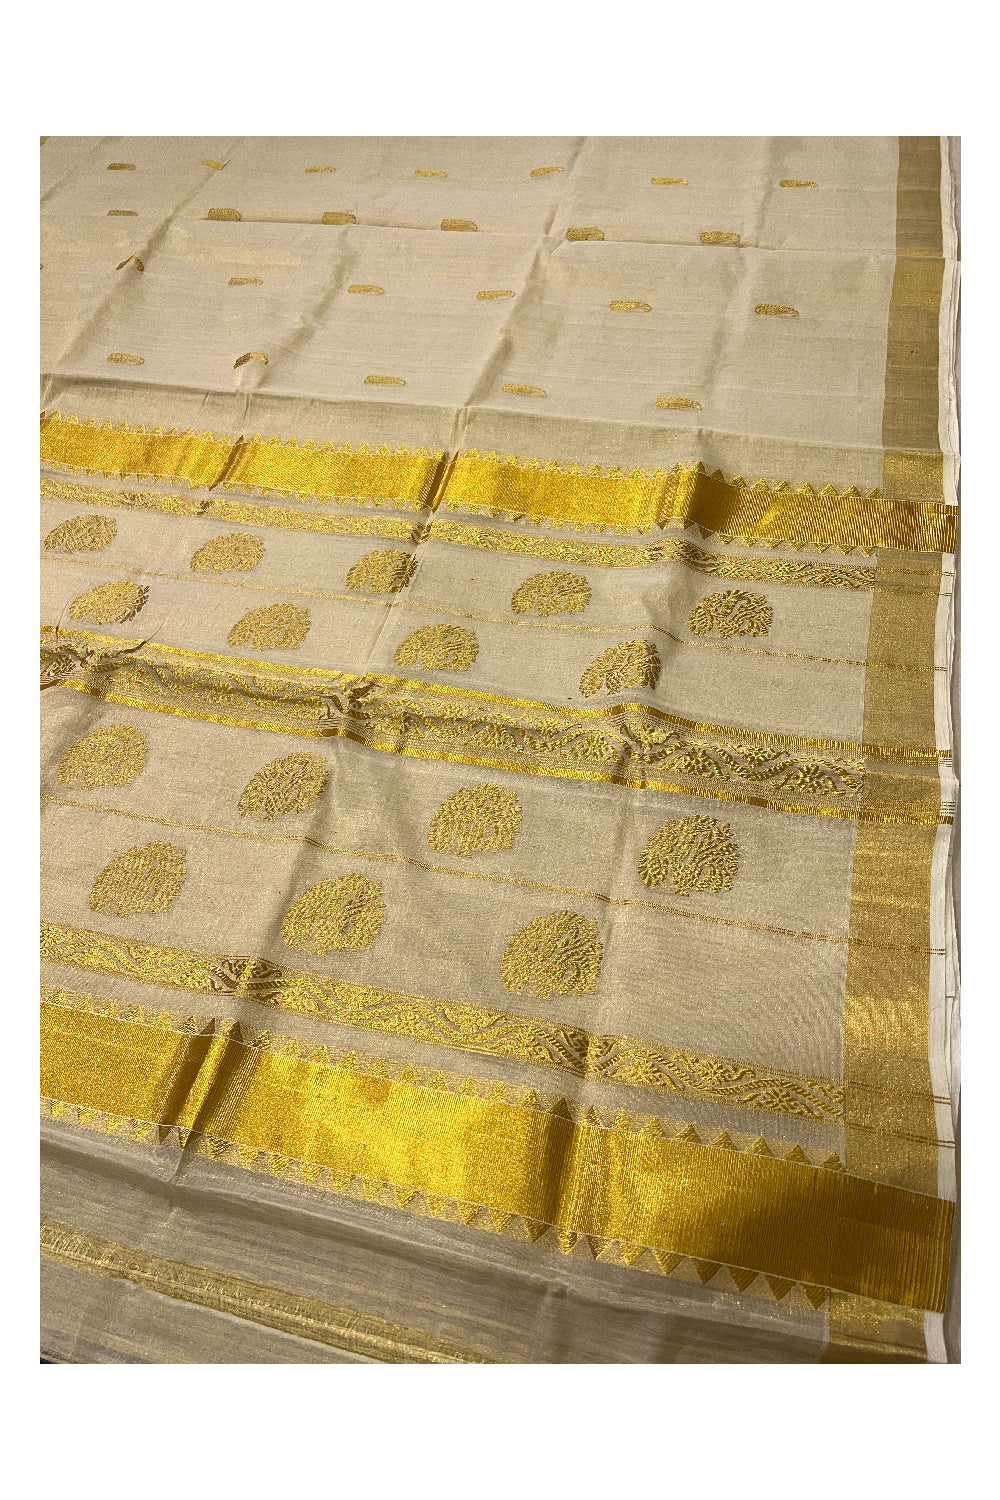 Southloom Premium Handloom Tissue Kasavu Saree with Hand Woven Motifs